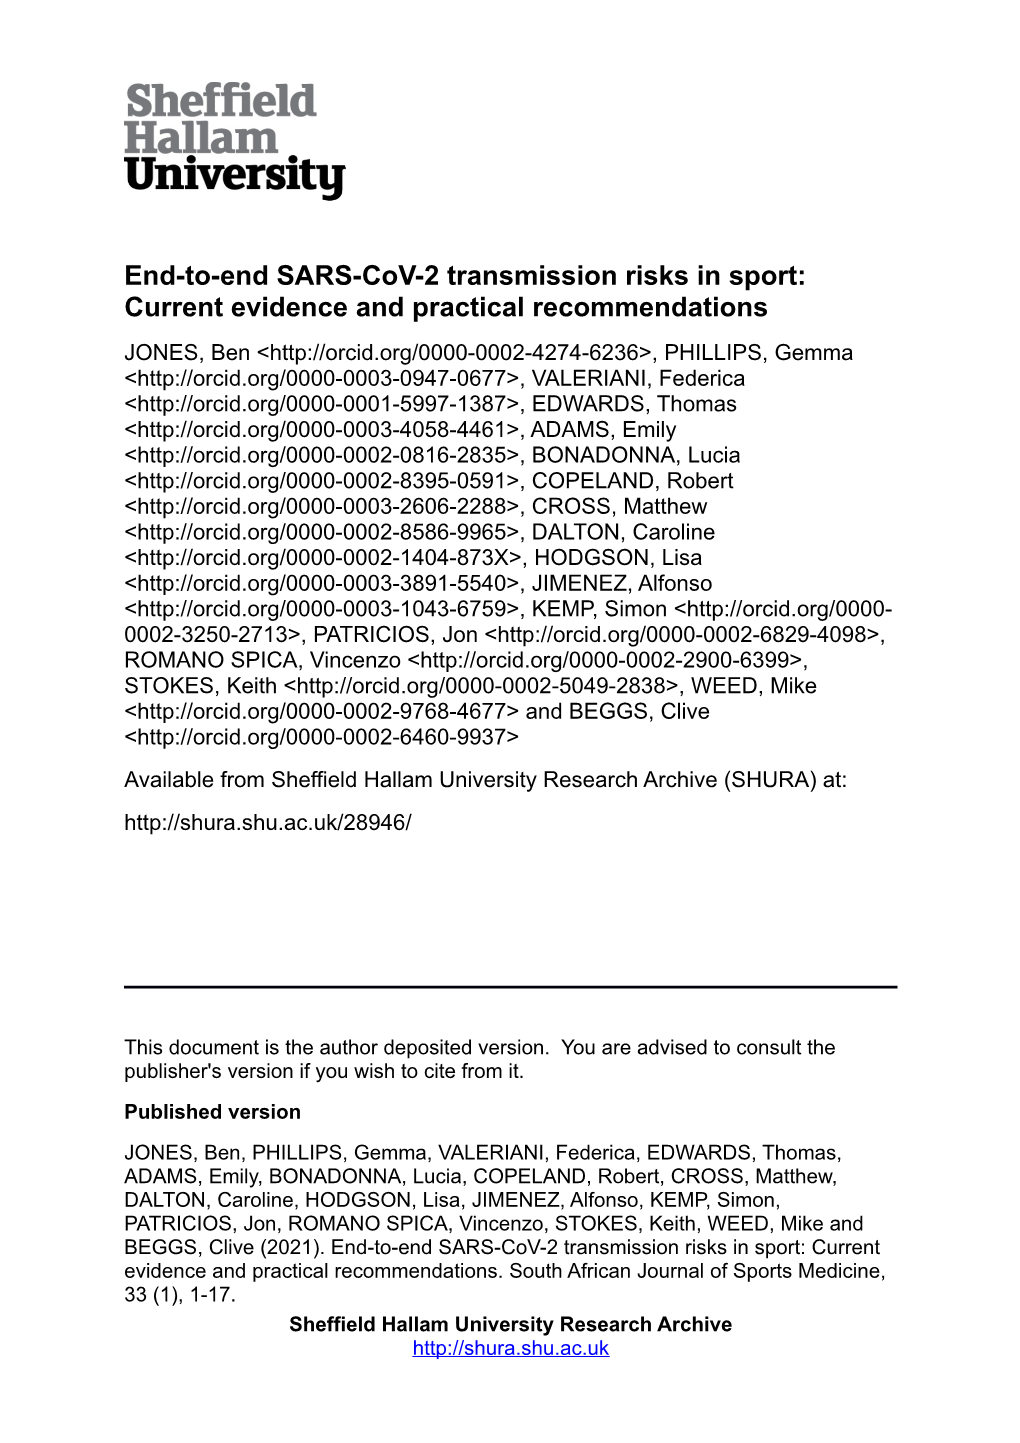 End-To-End SARS-Cov-2 Transmission Risks in Sport